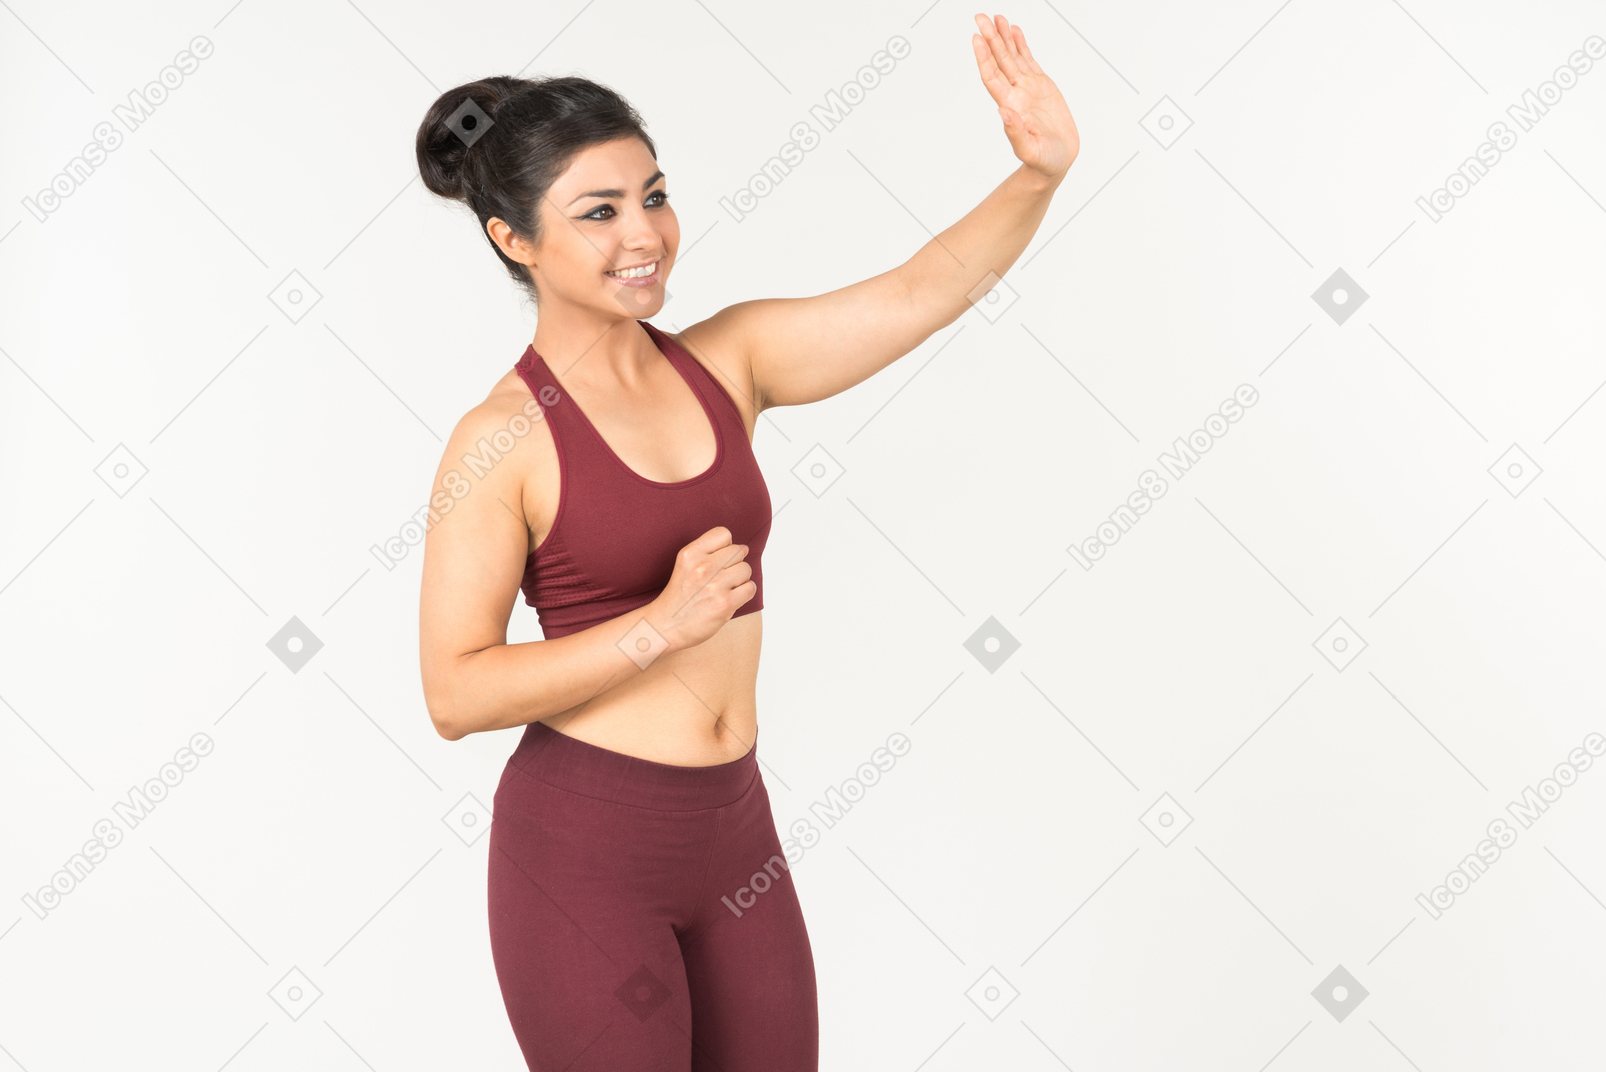 Indian girl in sportswear jogging